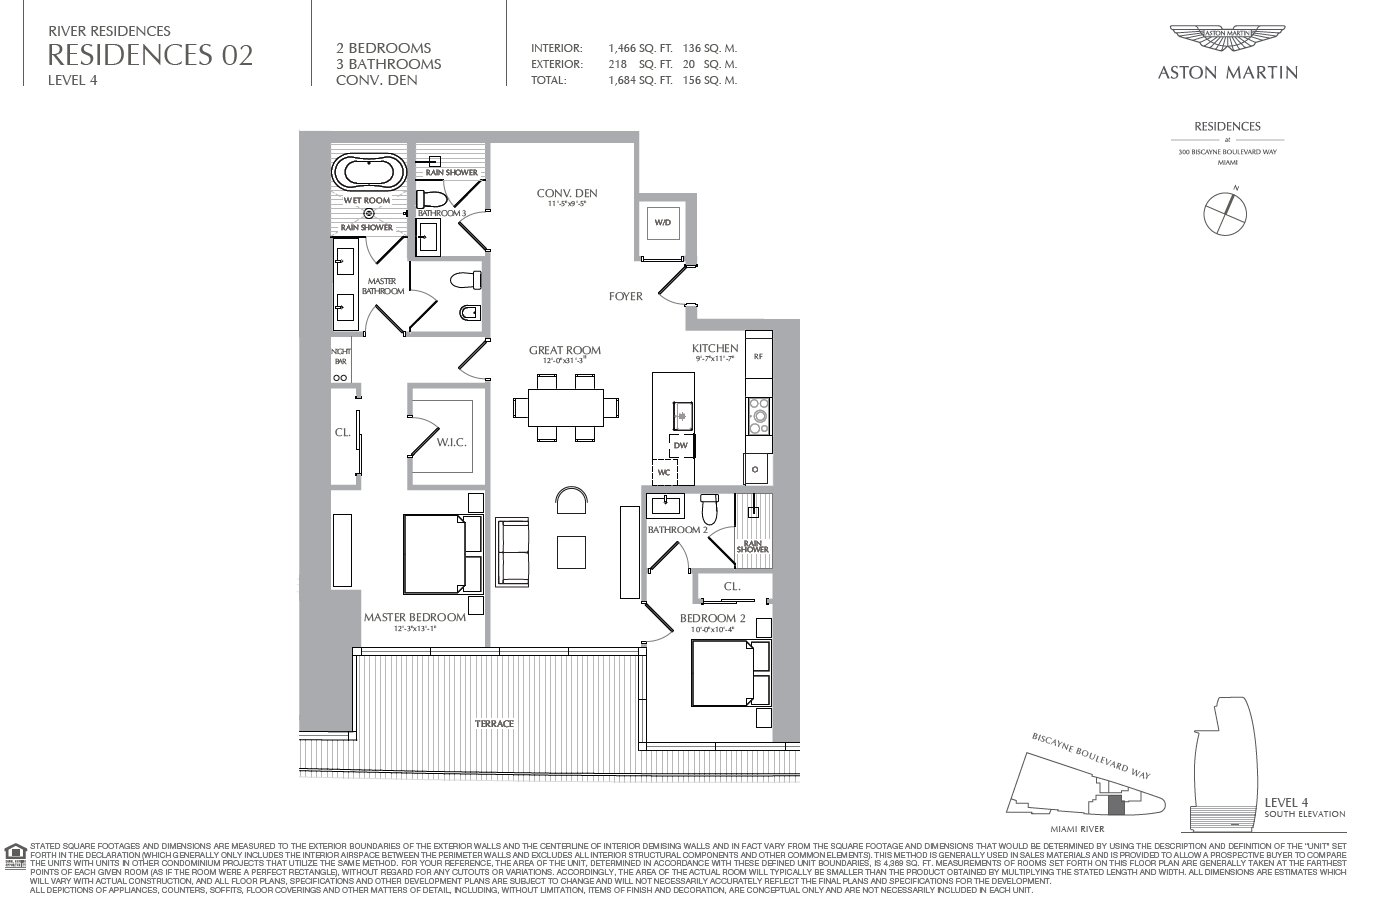 Aston Martin Residences Floor Plan 02